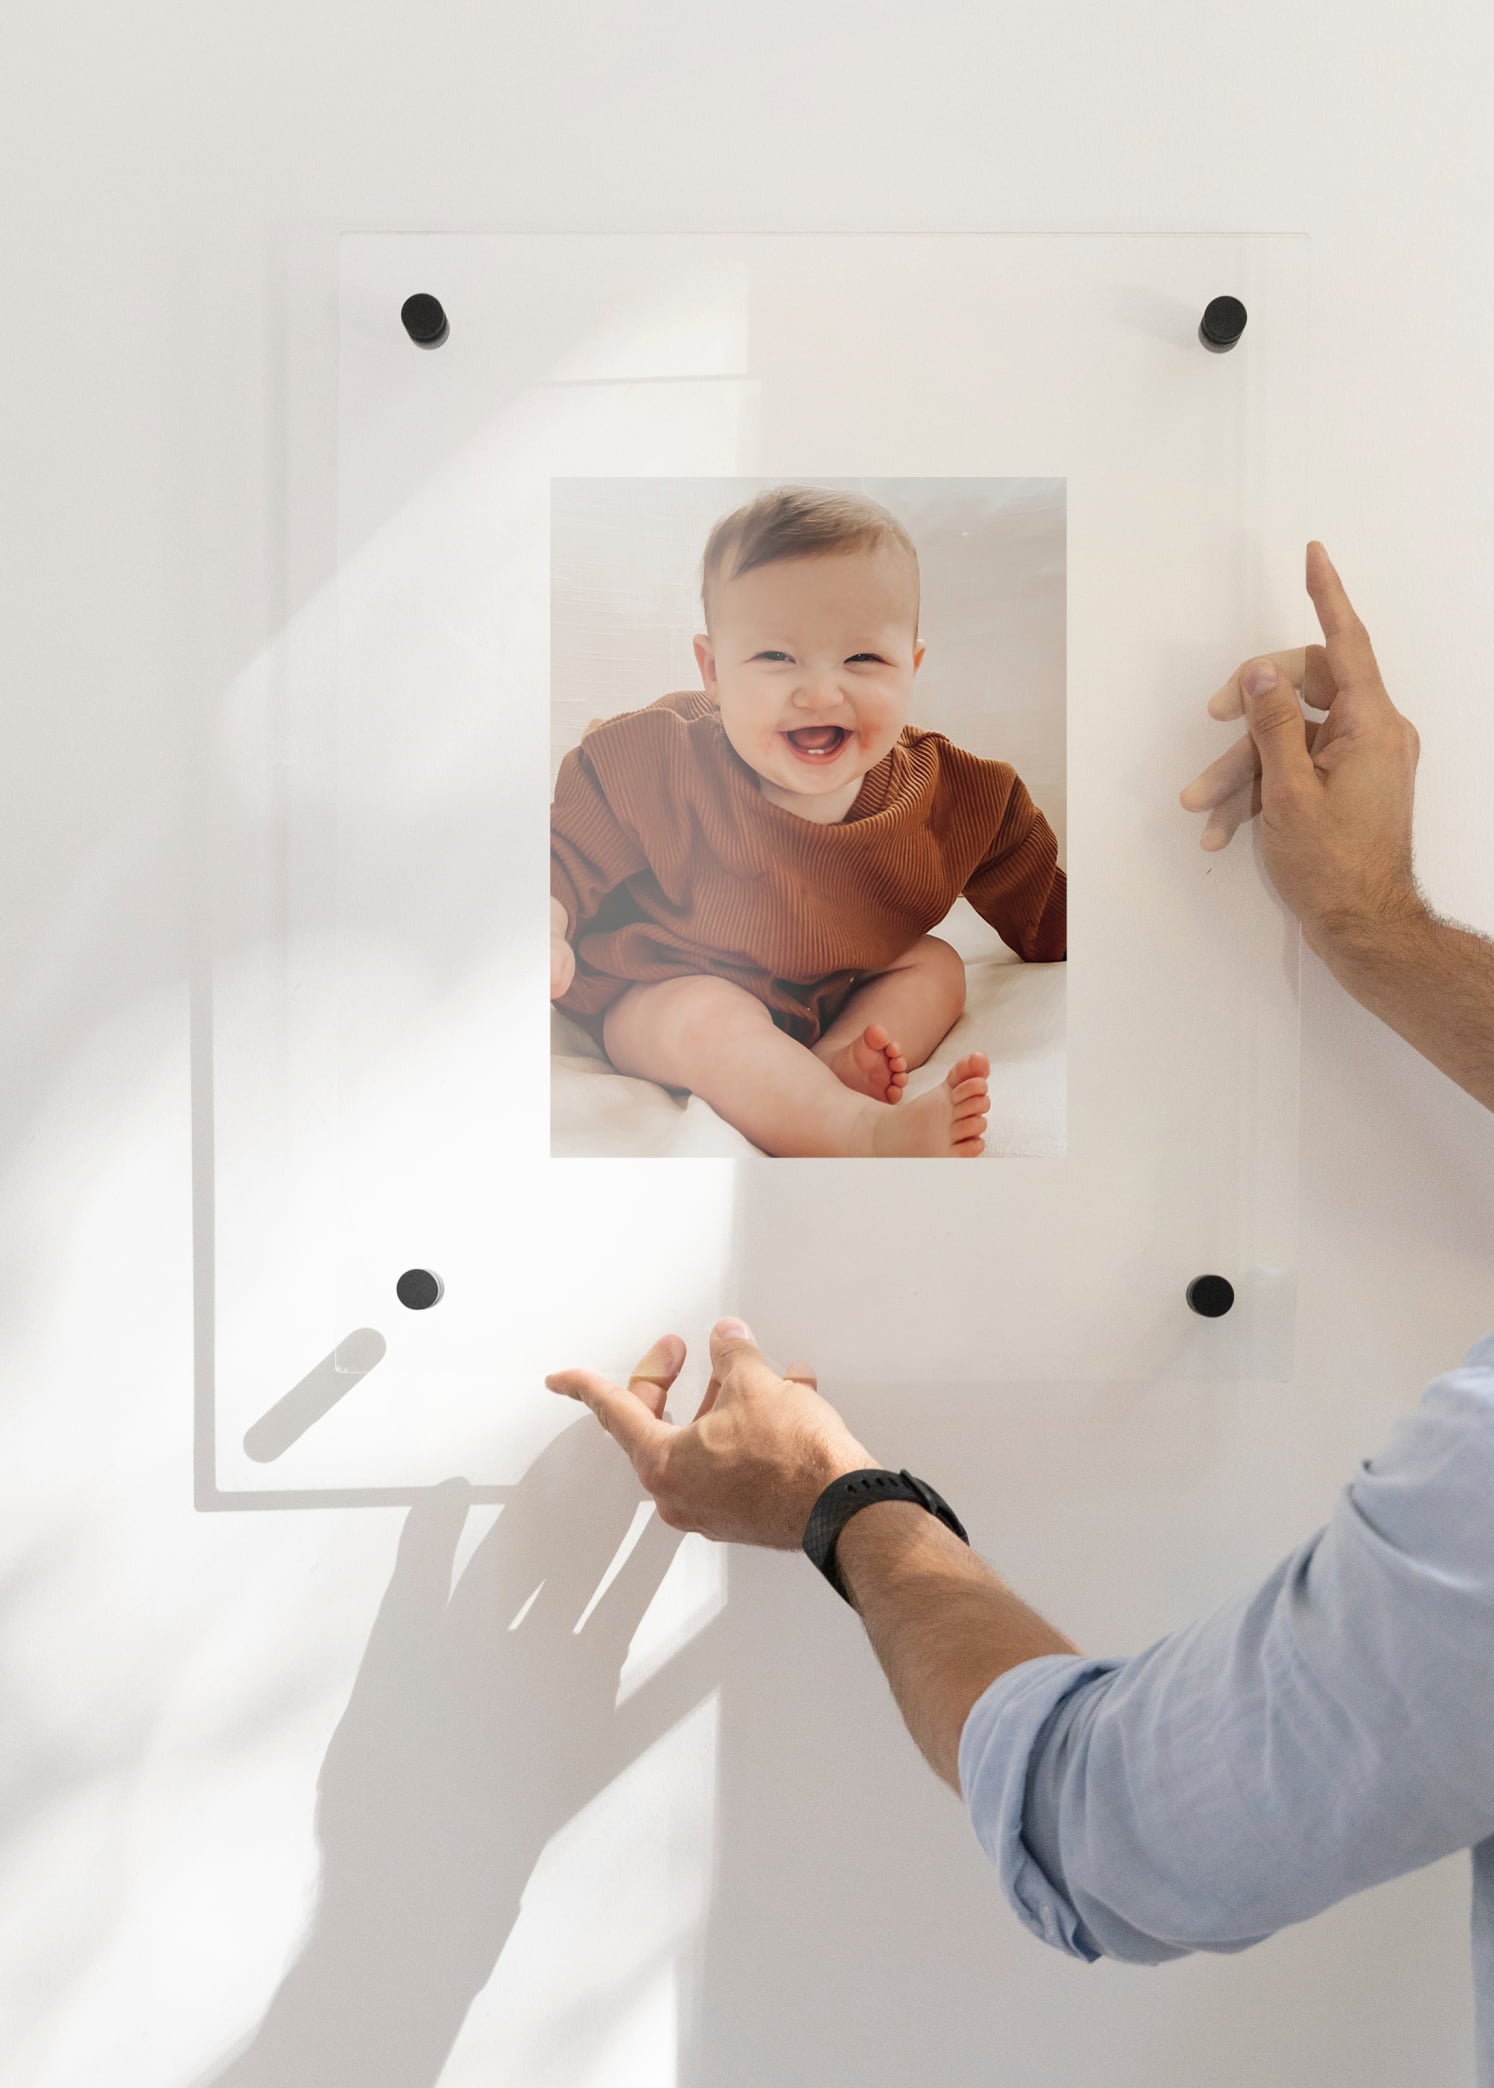 Floating Frame featuring black finishing showcasing laughing baby image